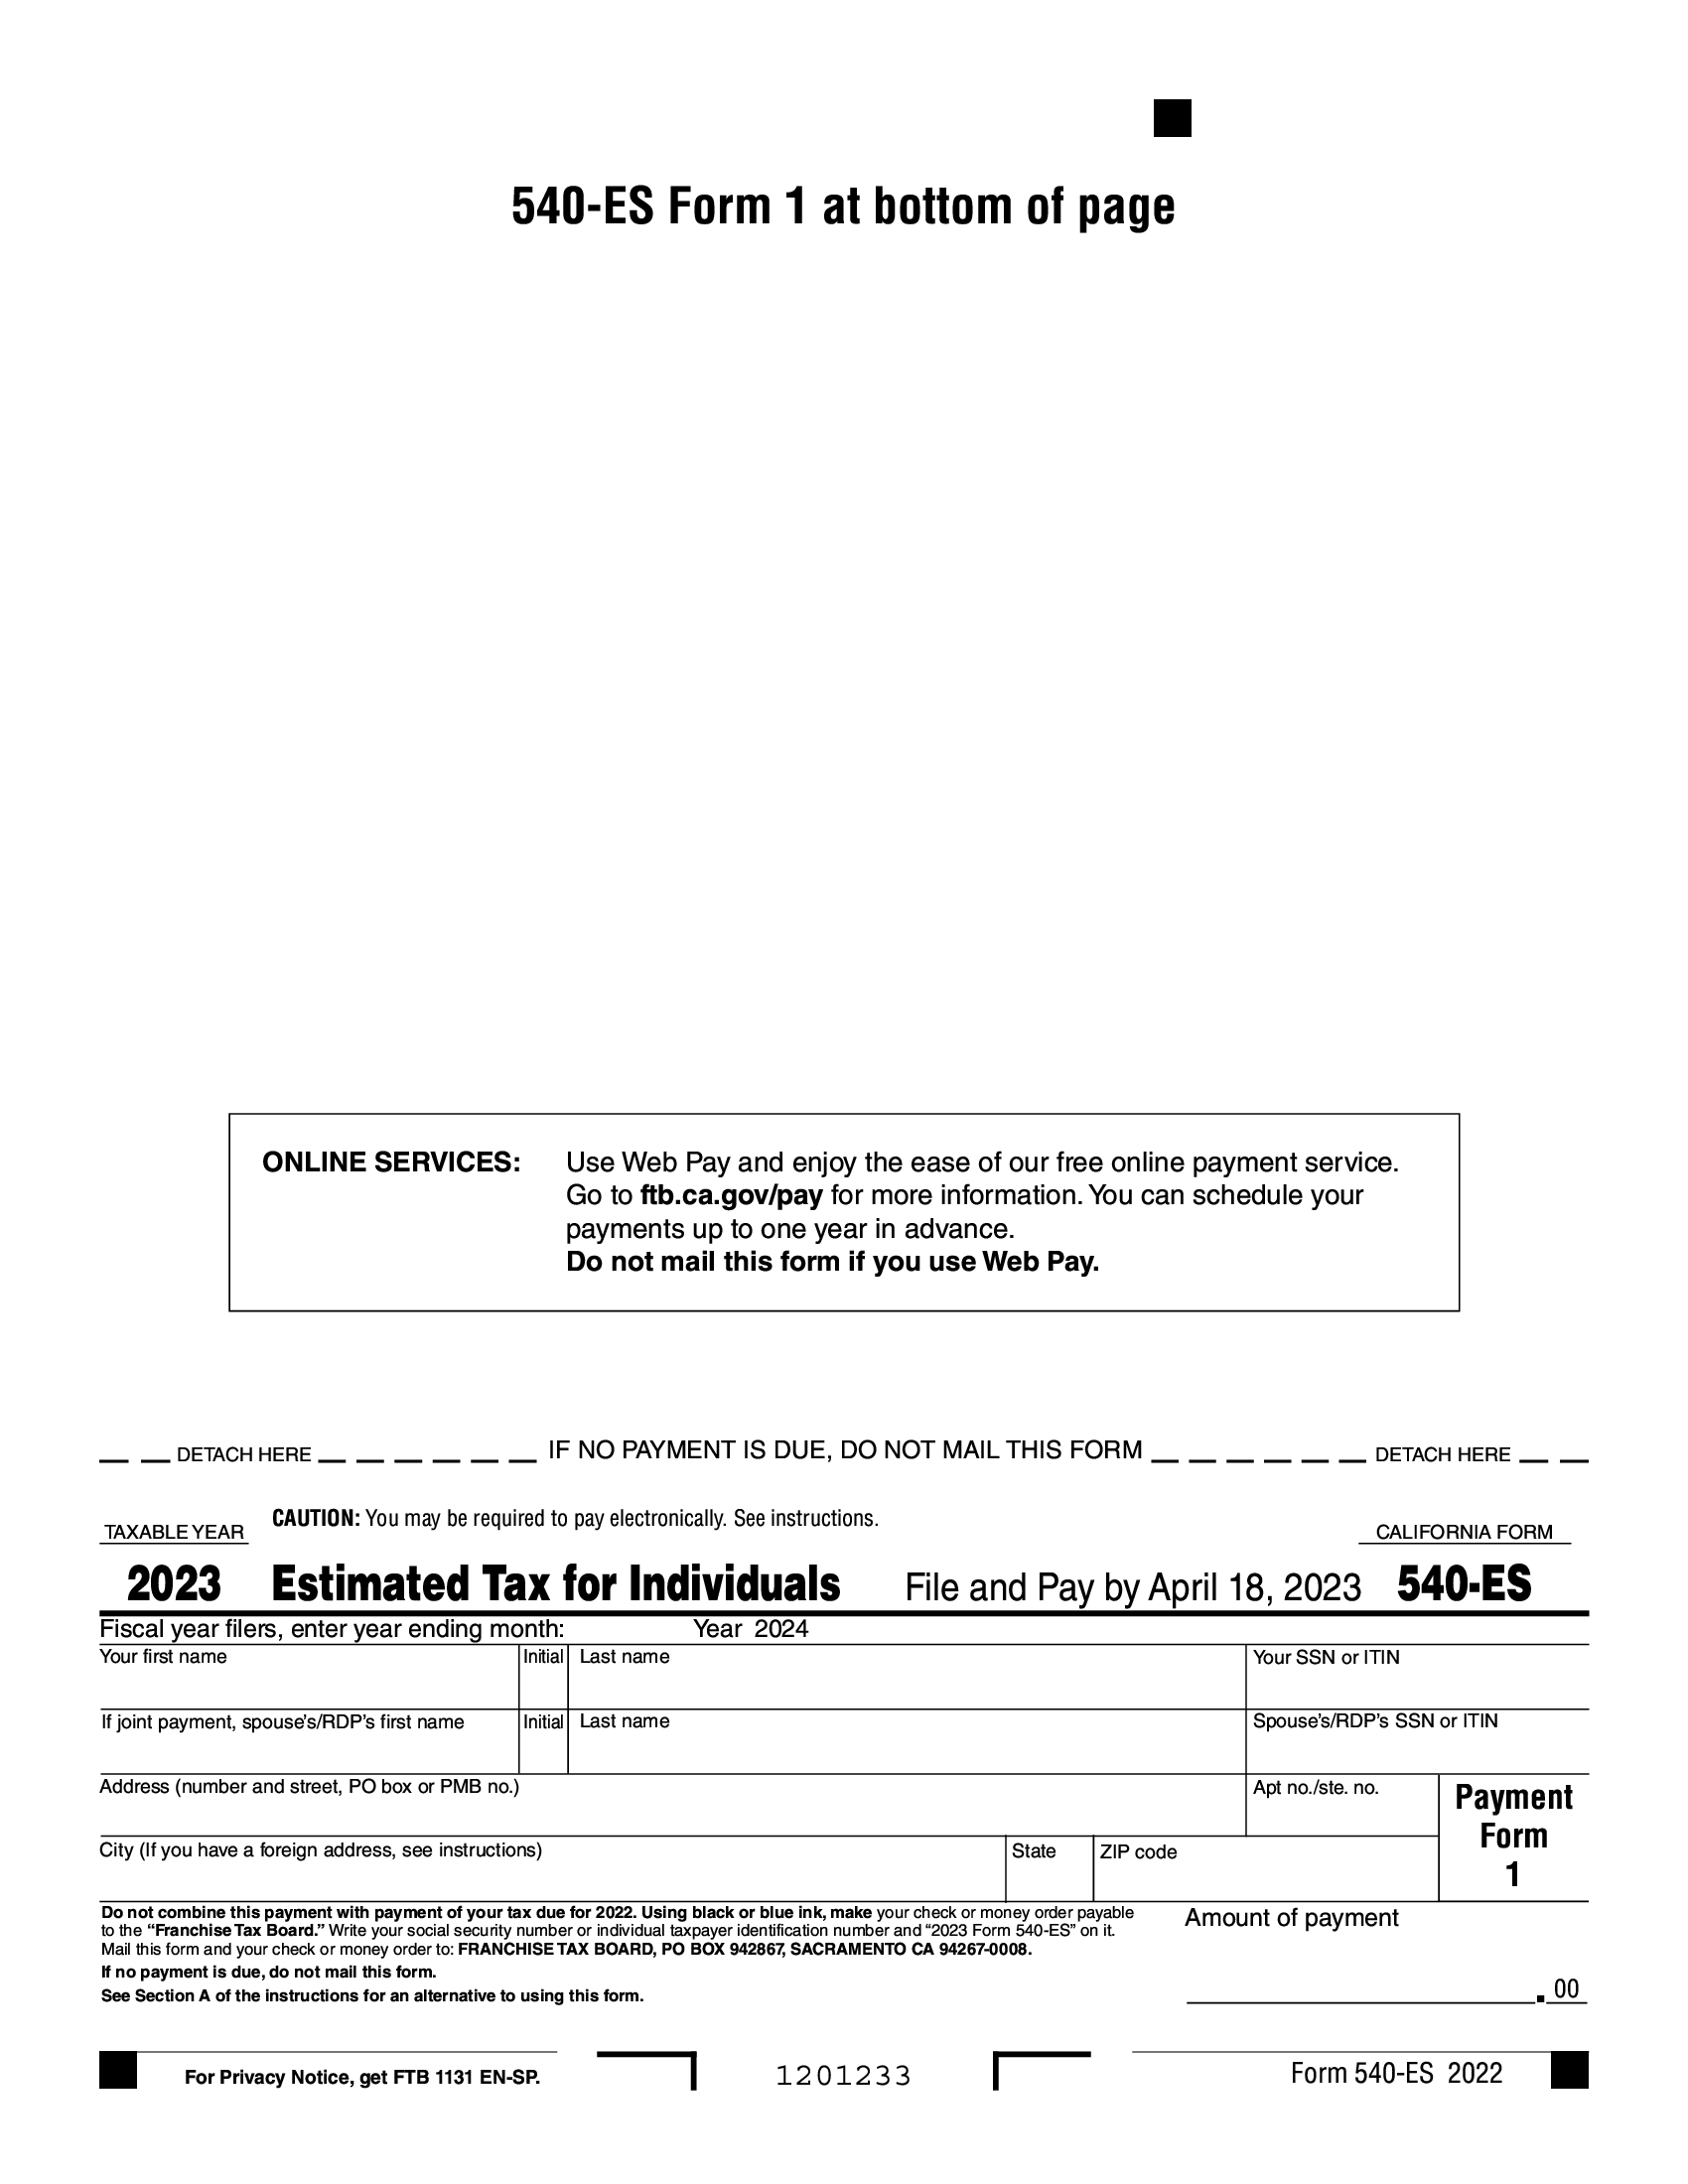 California Form 540 Es 2023 Printable Forms Free Online